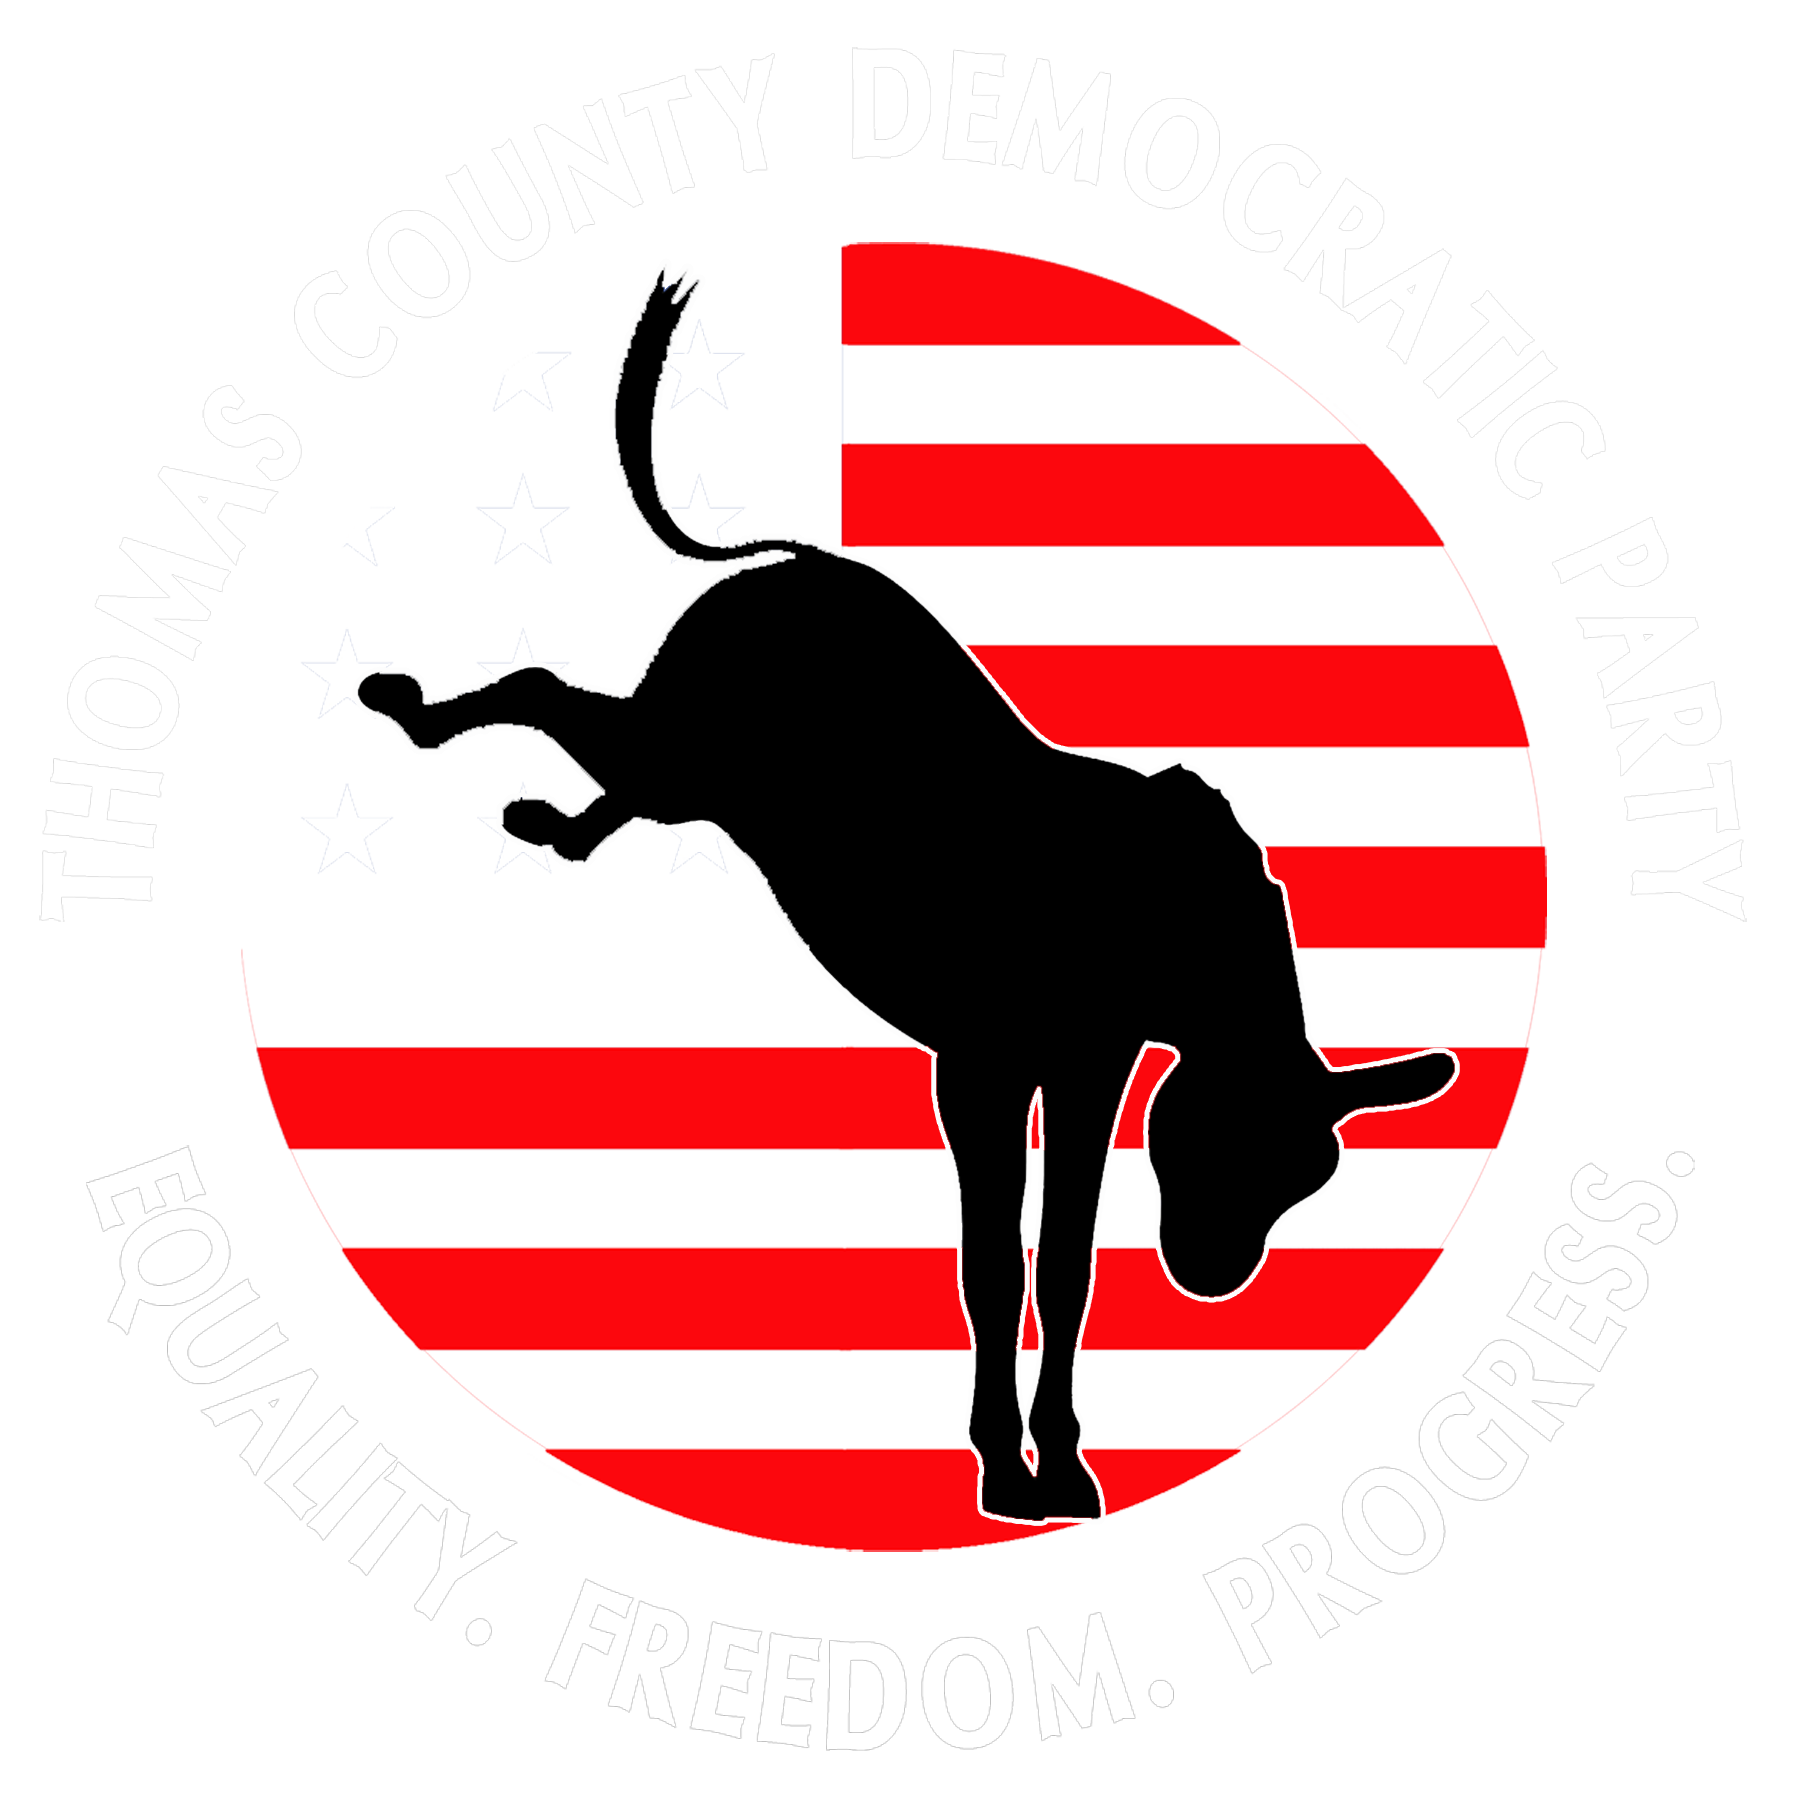 Thomas County Democrats